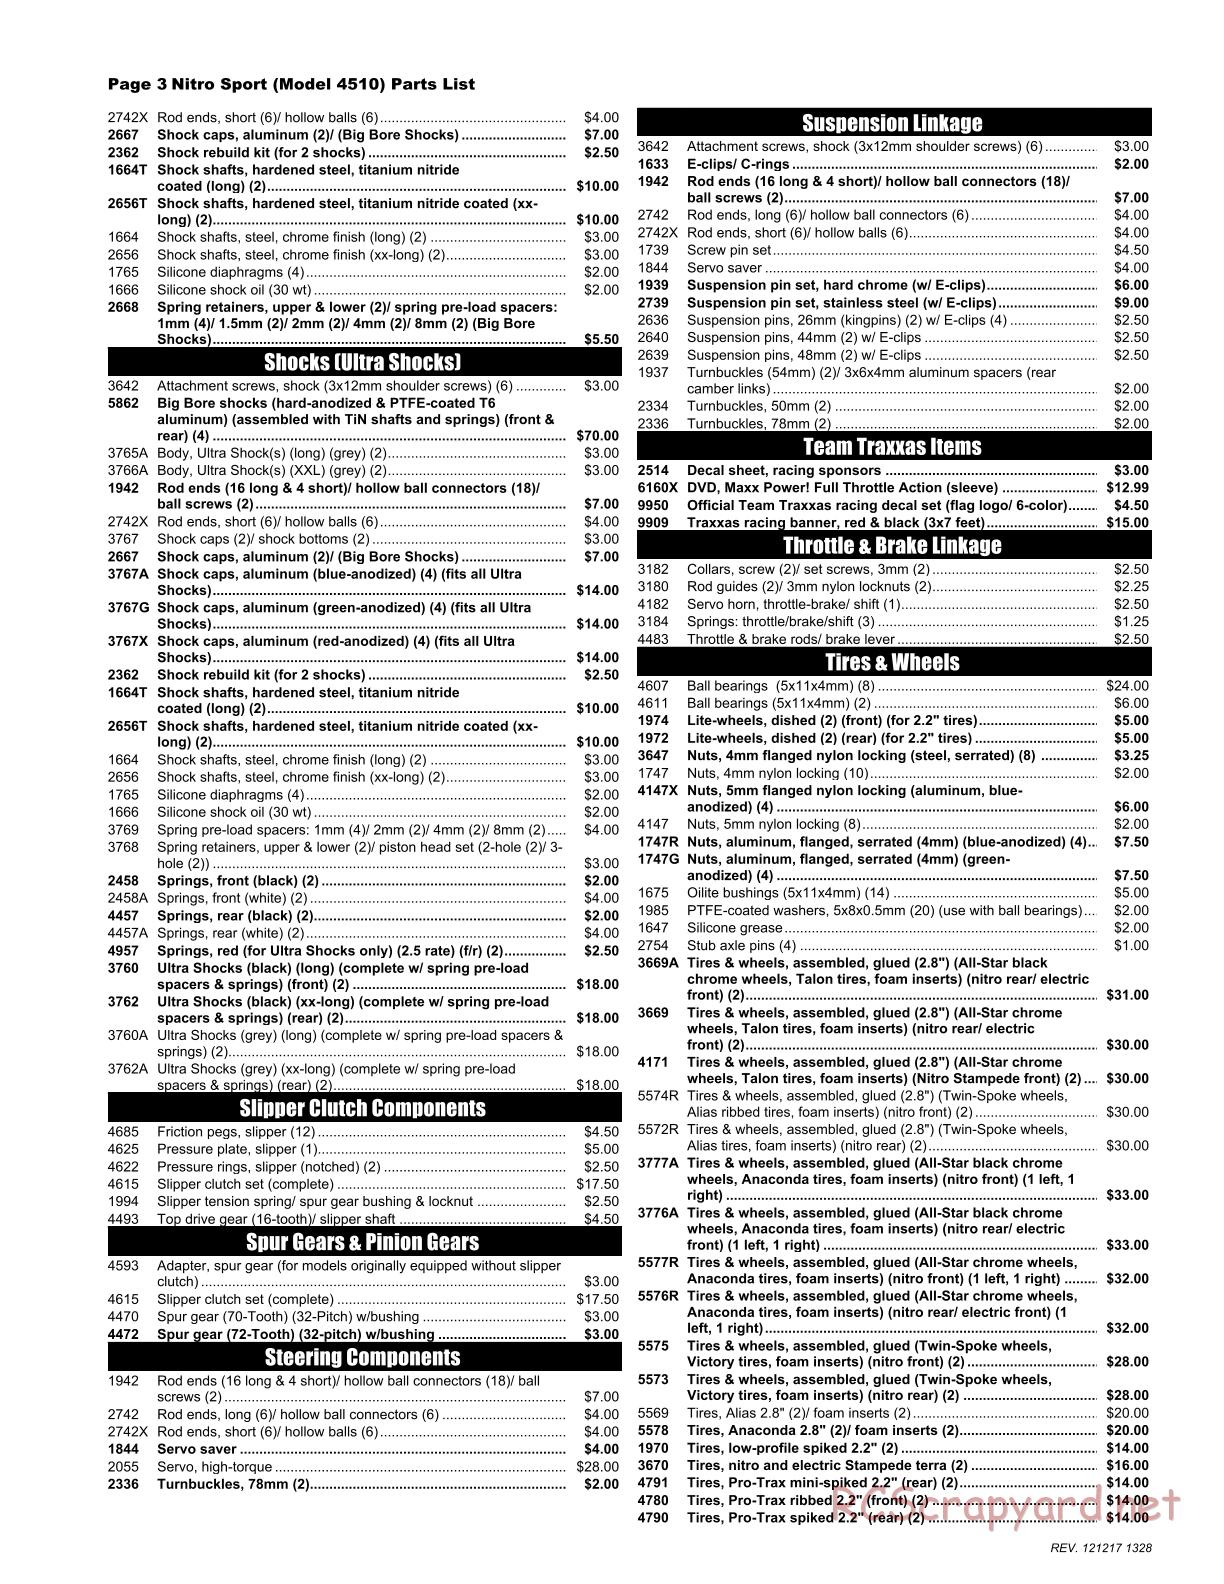 Traxxas - Nitro Sport - Parts List - Page 3